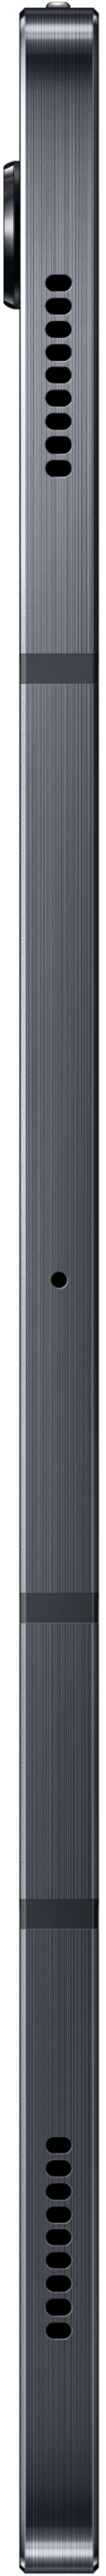 Samsung Galaxy Tab S7+ 12.4" Snapdragon 865+ 128GB Mystisk svart